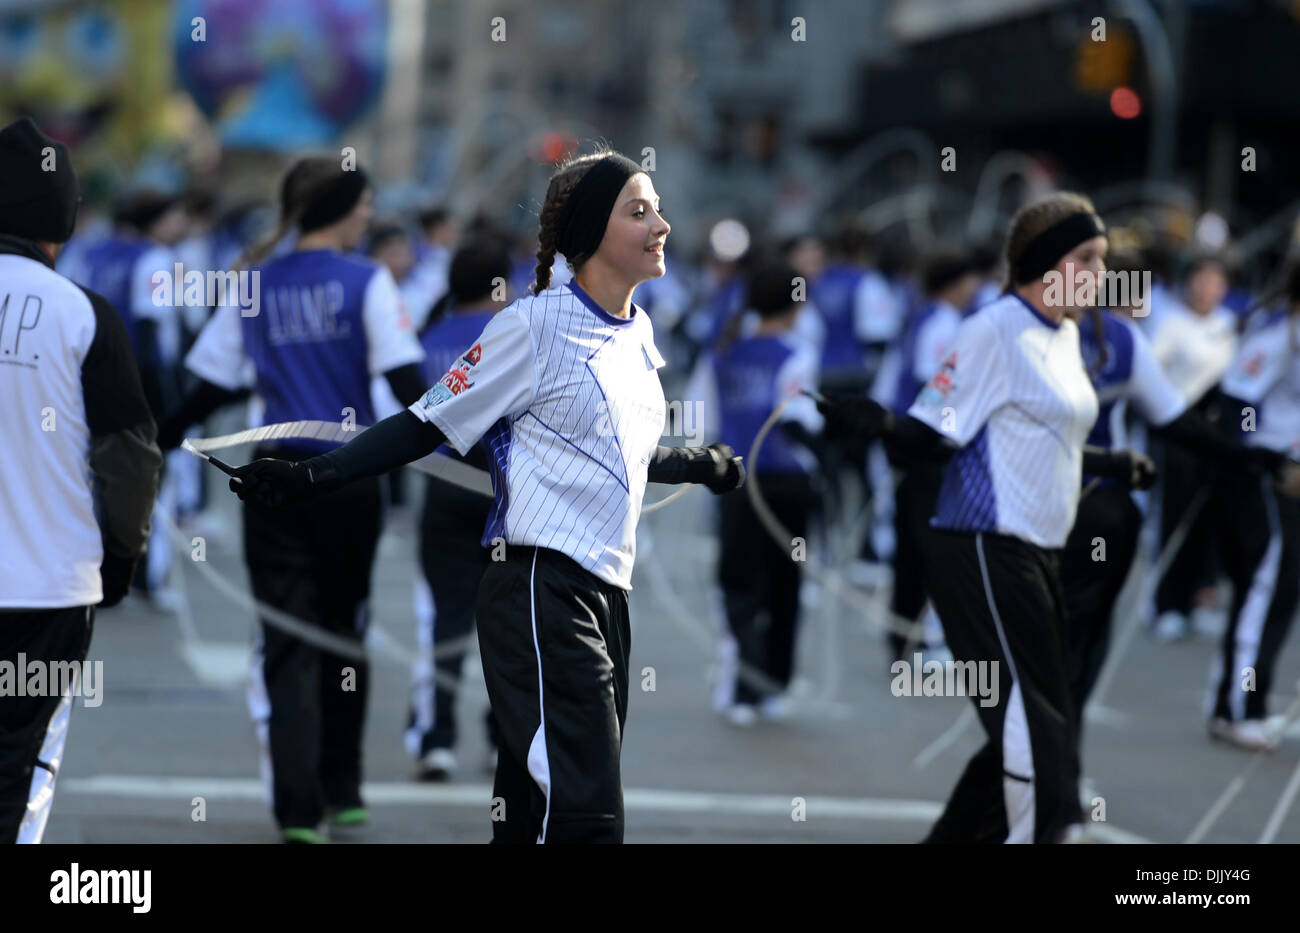 New York, USA. 28. November 2013. Menschen besuchen die Macy's Thanksgiving Day Parade in New York, Vereinigte Staaten, 28. November 2013. (Xinhua/Wang Lei/Alamy Live News) Stockfoto